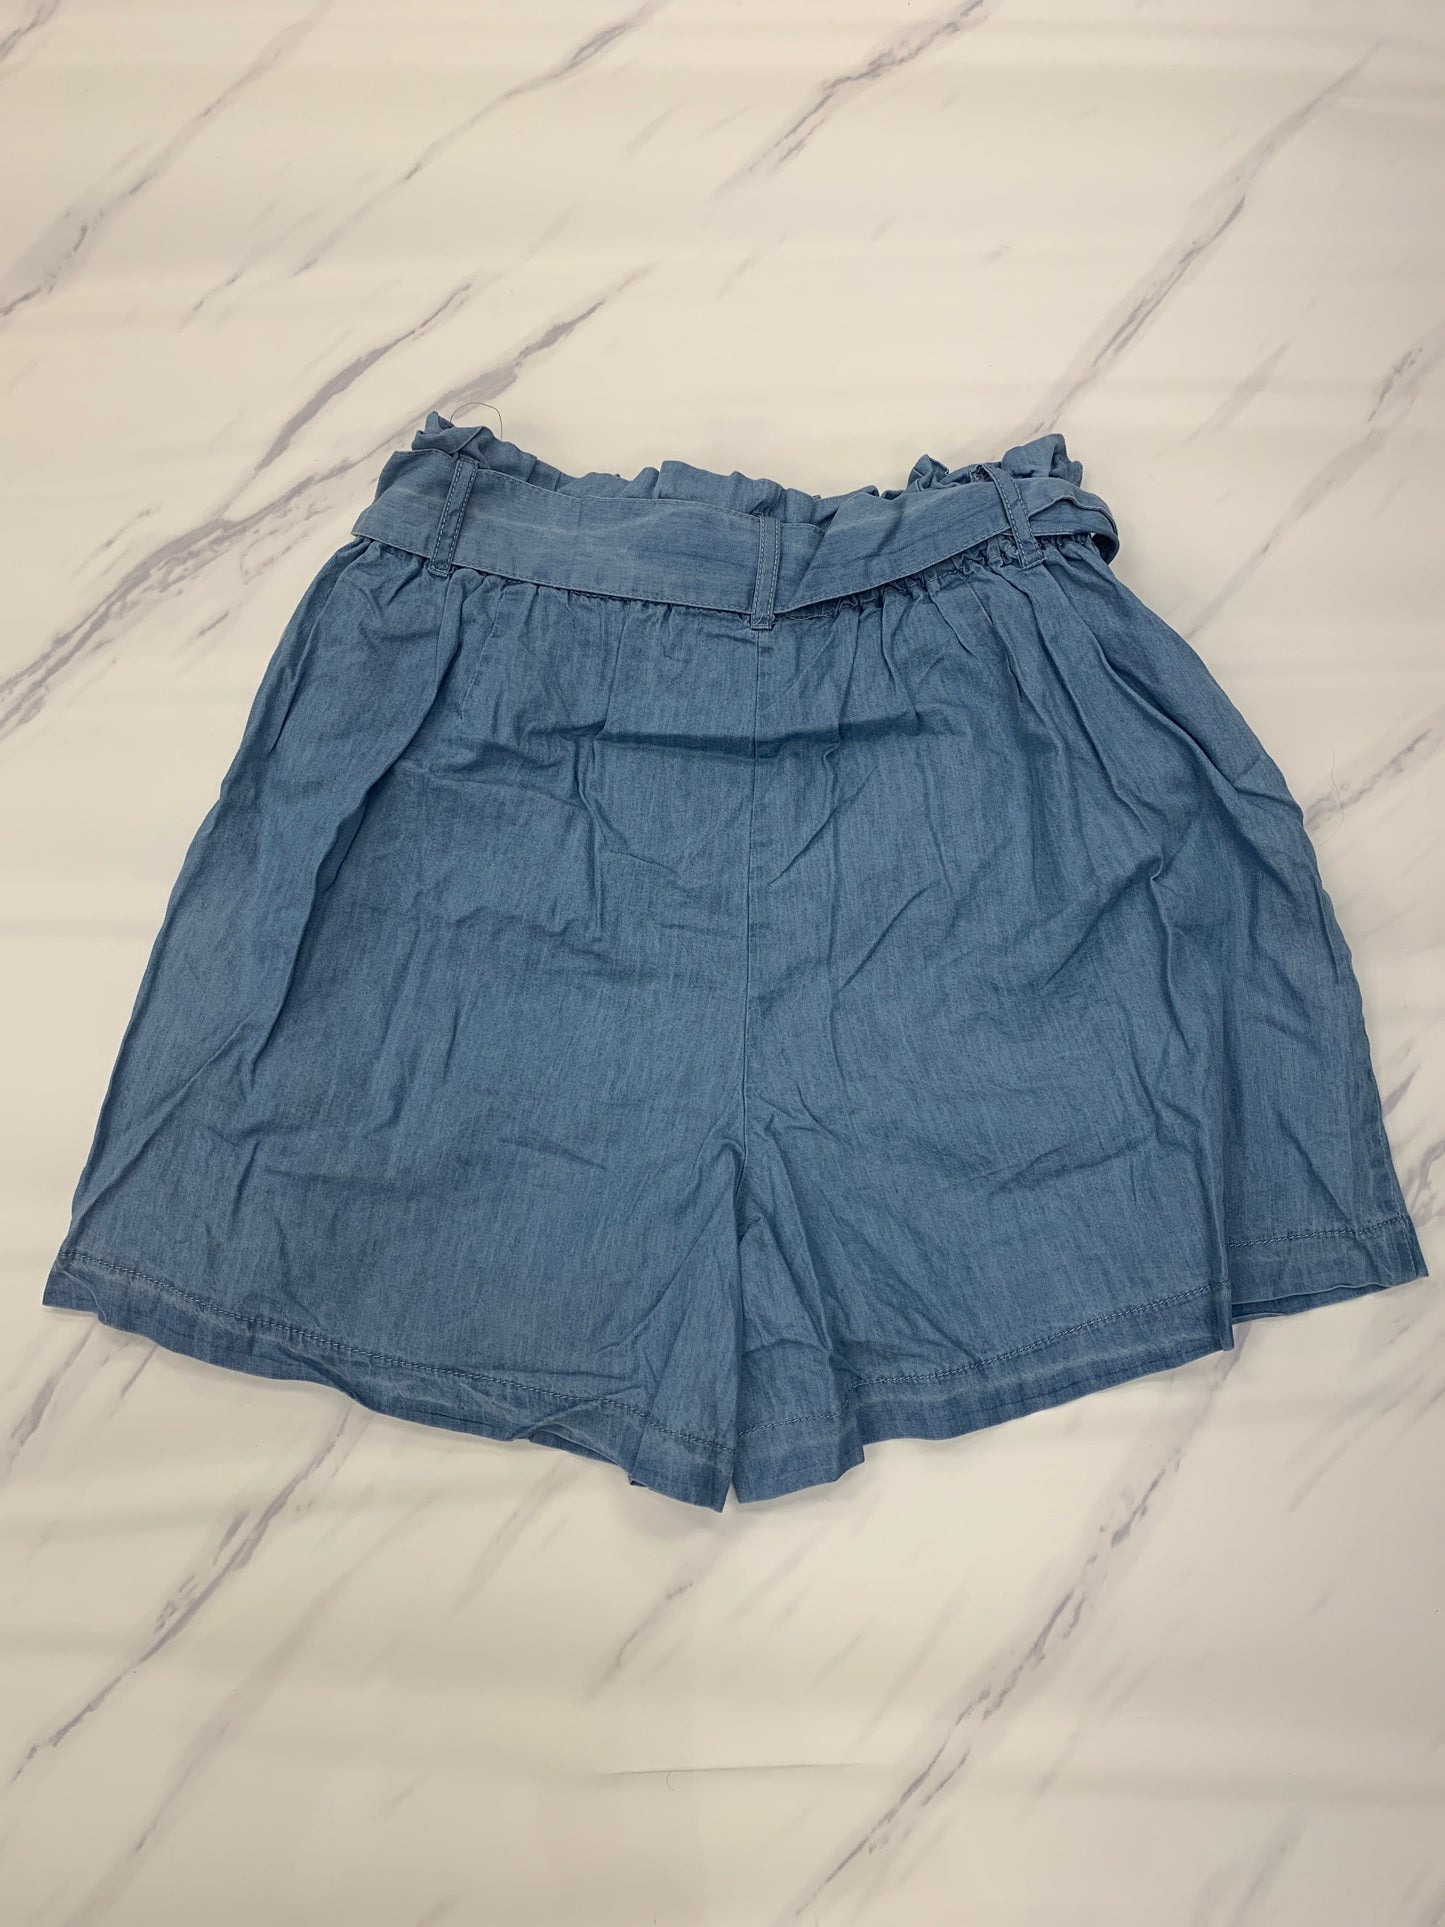 Shorts By Soho Design Group  Size: Xl